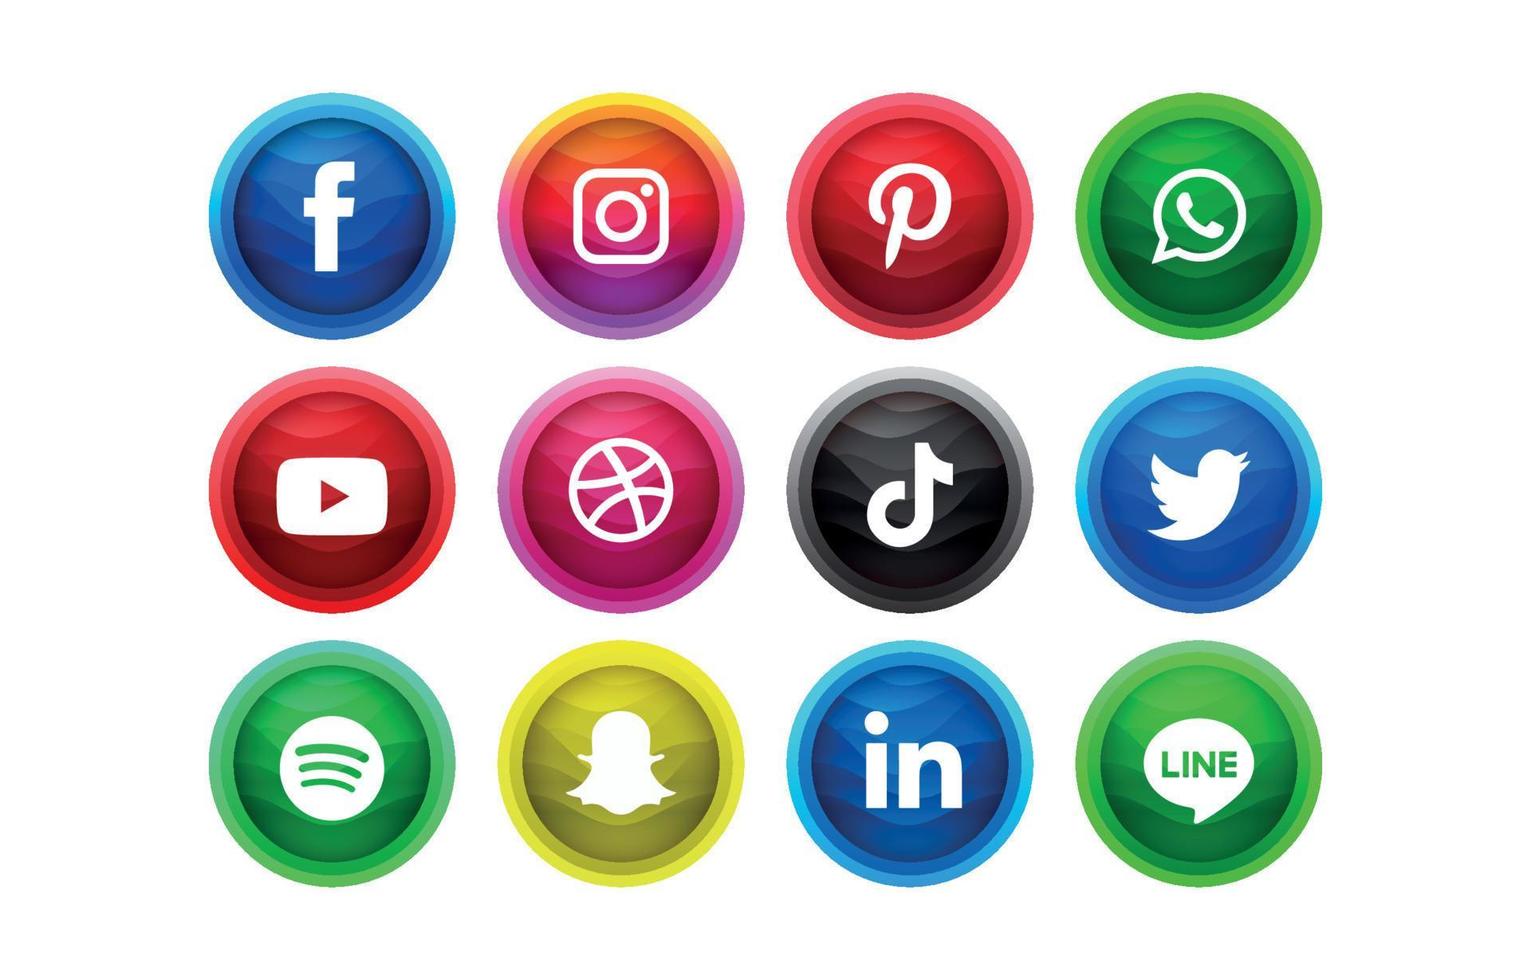 en línea tecnología social medios de comunicación logo conjunto vector